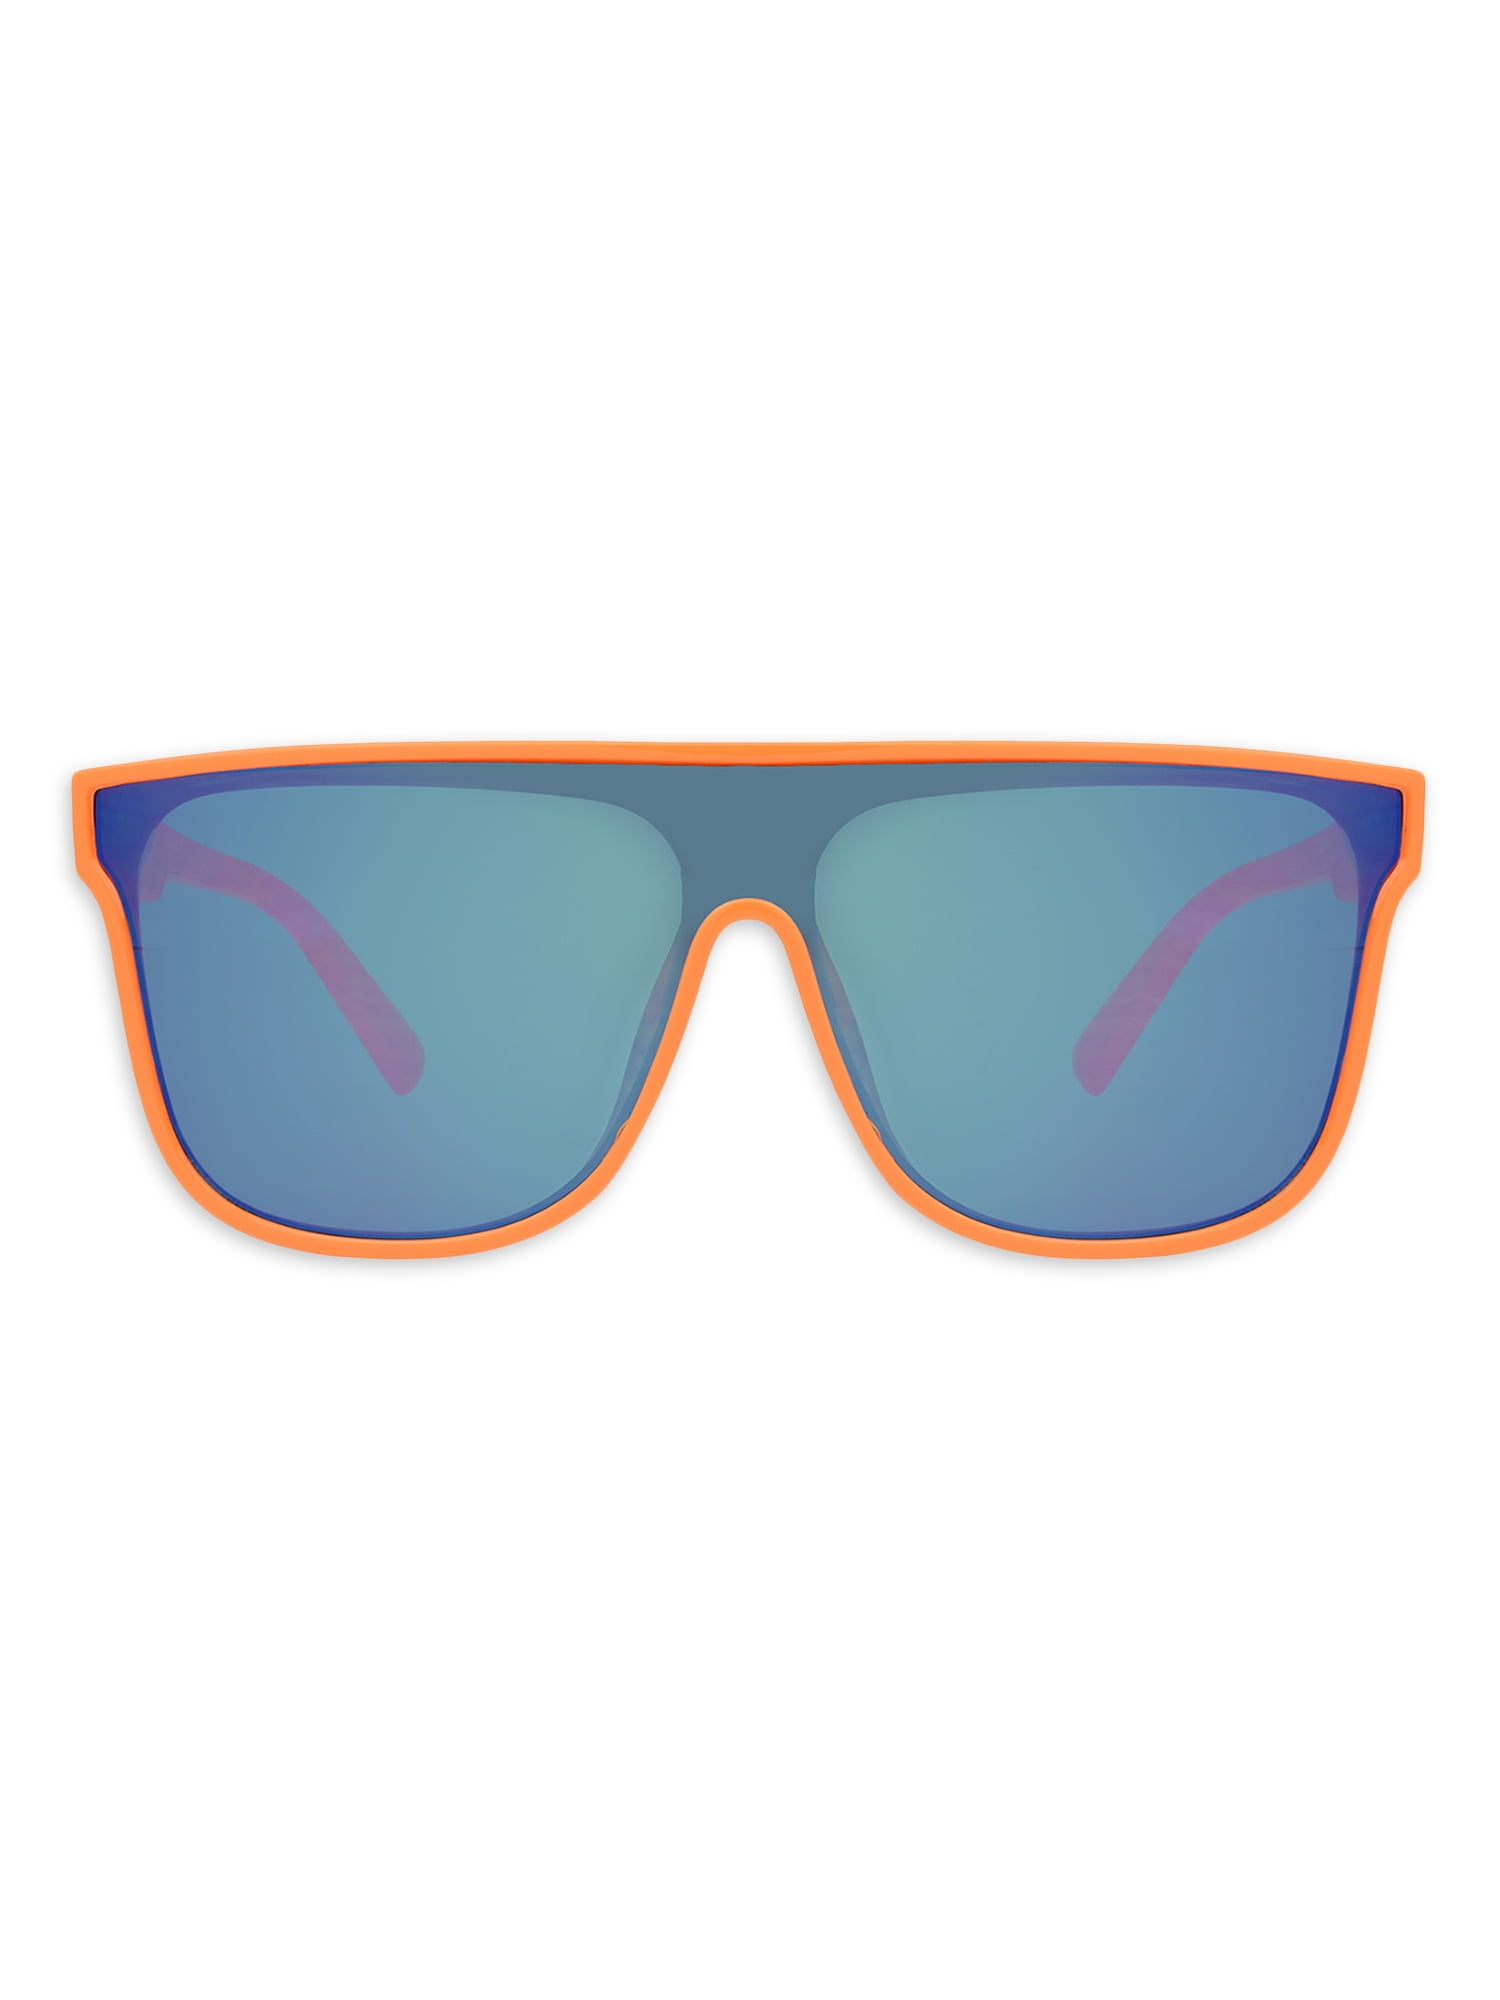 Blackfin Realtree XTRA Camo Sunglasses with Blue Mirror 400G Lenses by  Costa Del Mar